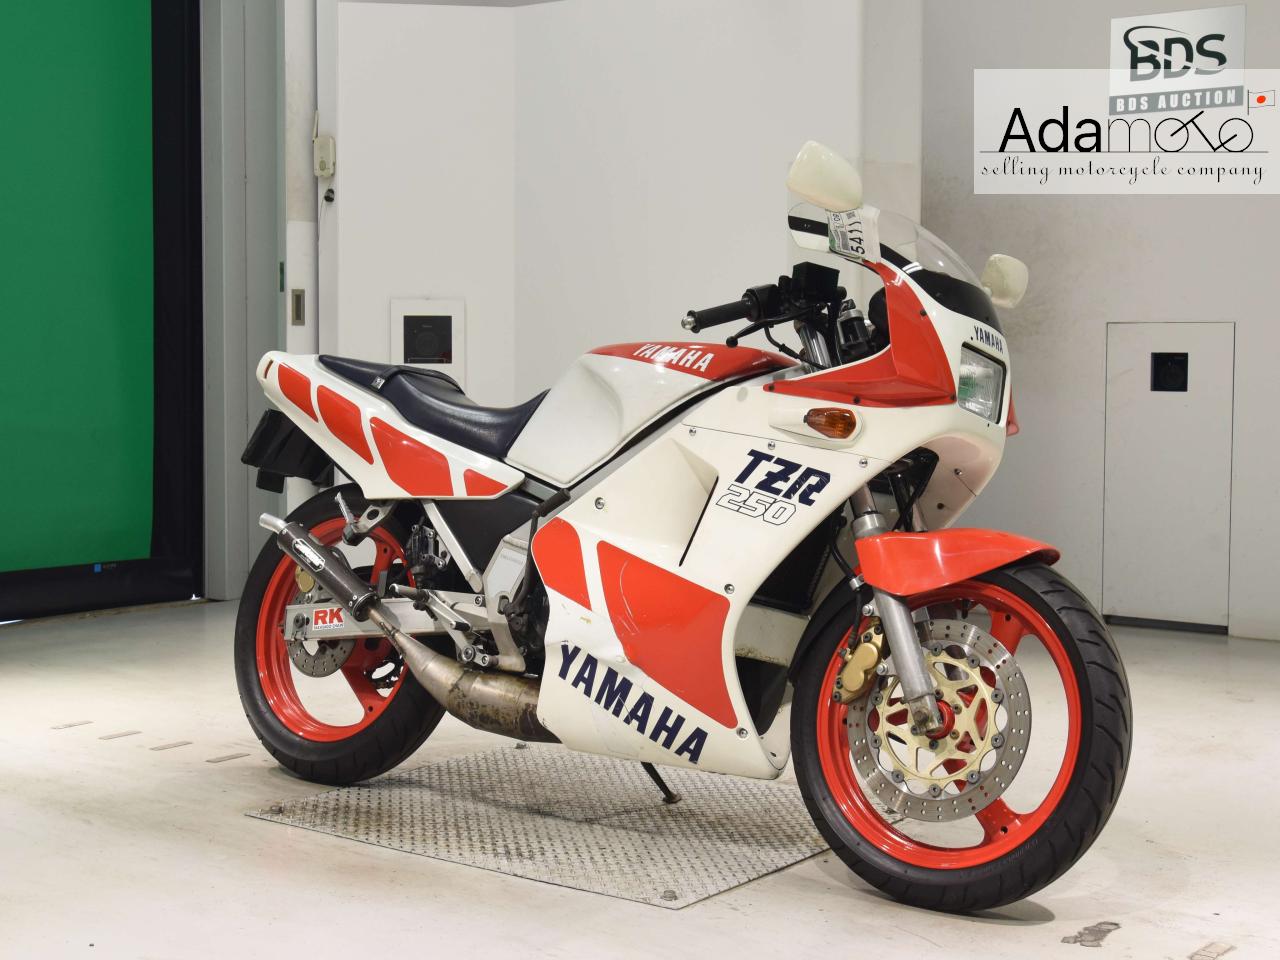 Yamaha TZR250 - Adamoto - Motorcycles from Japan